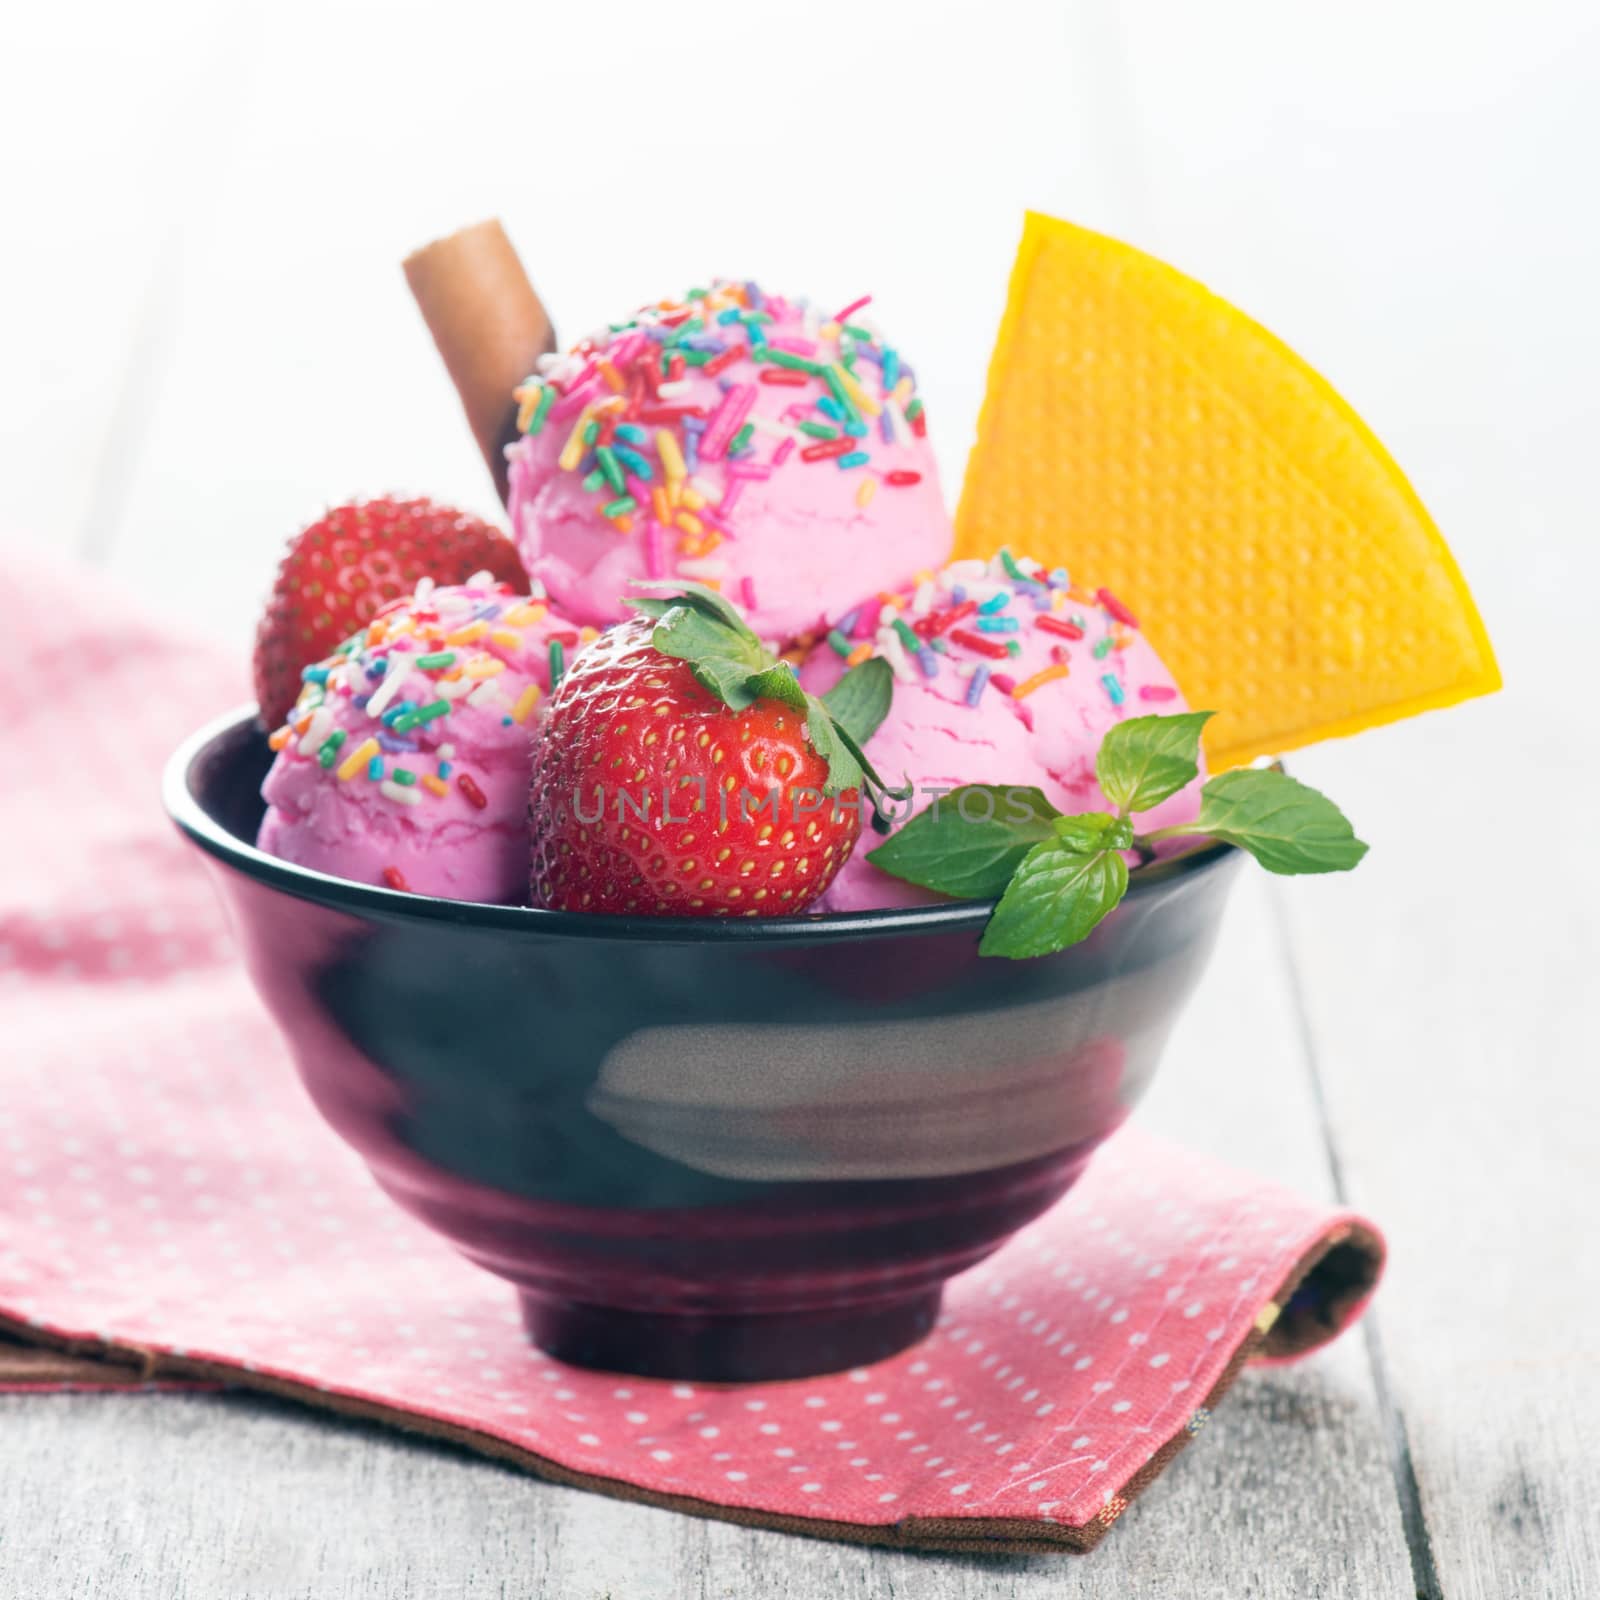 strawberry ice cream with fruits by szefei